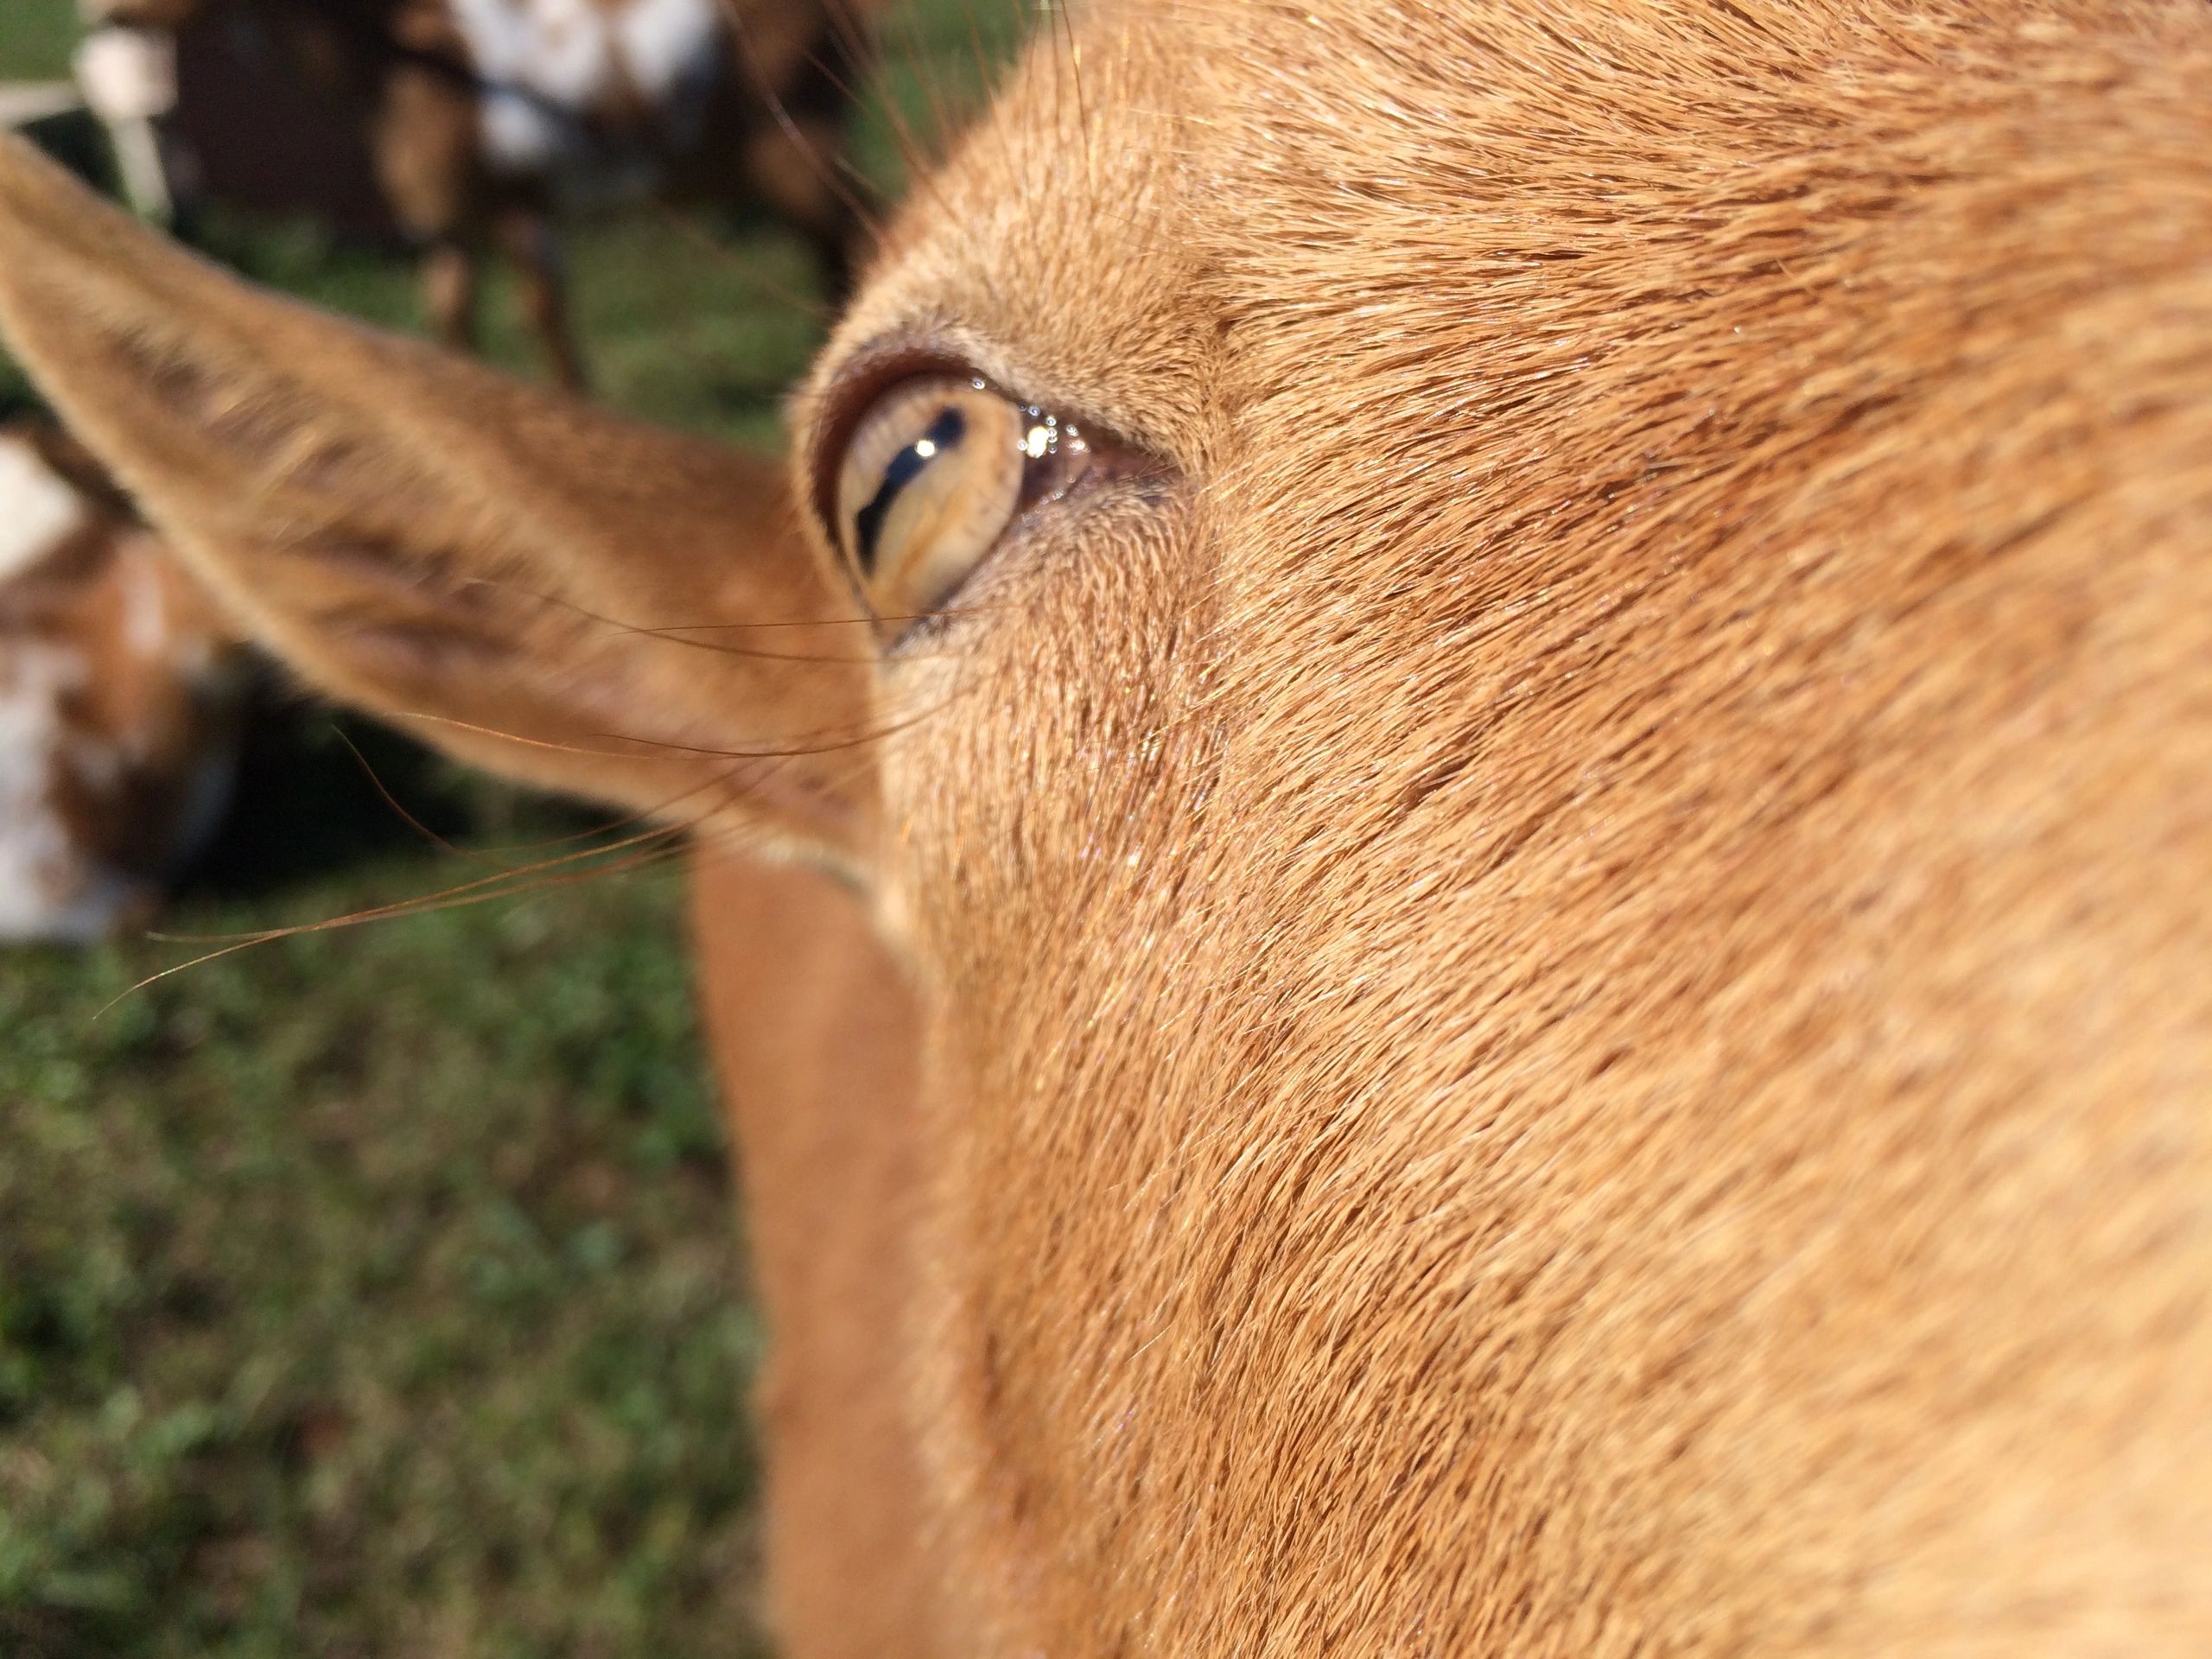 goat's eye